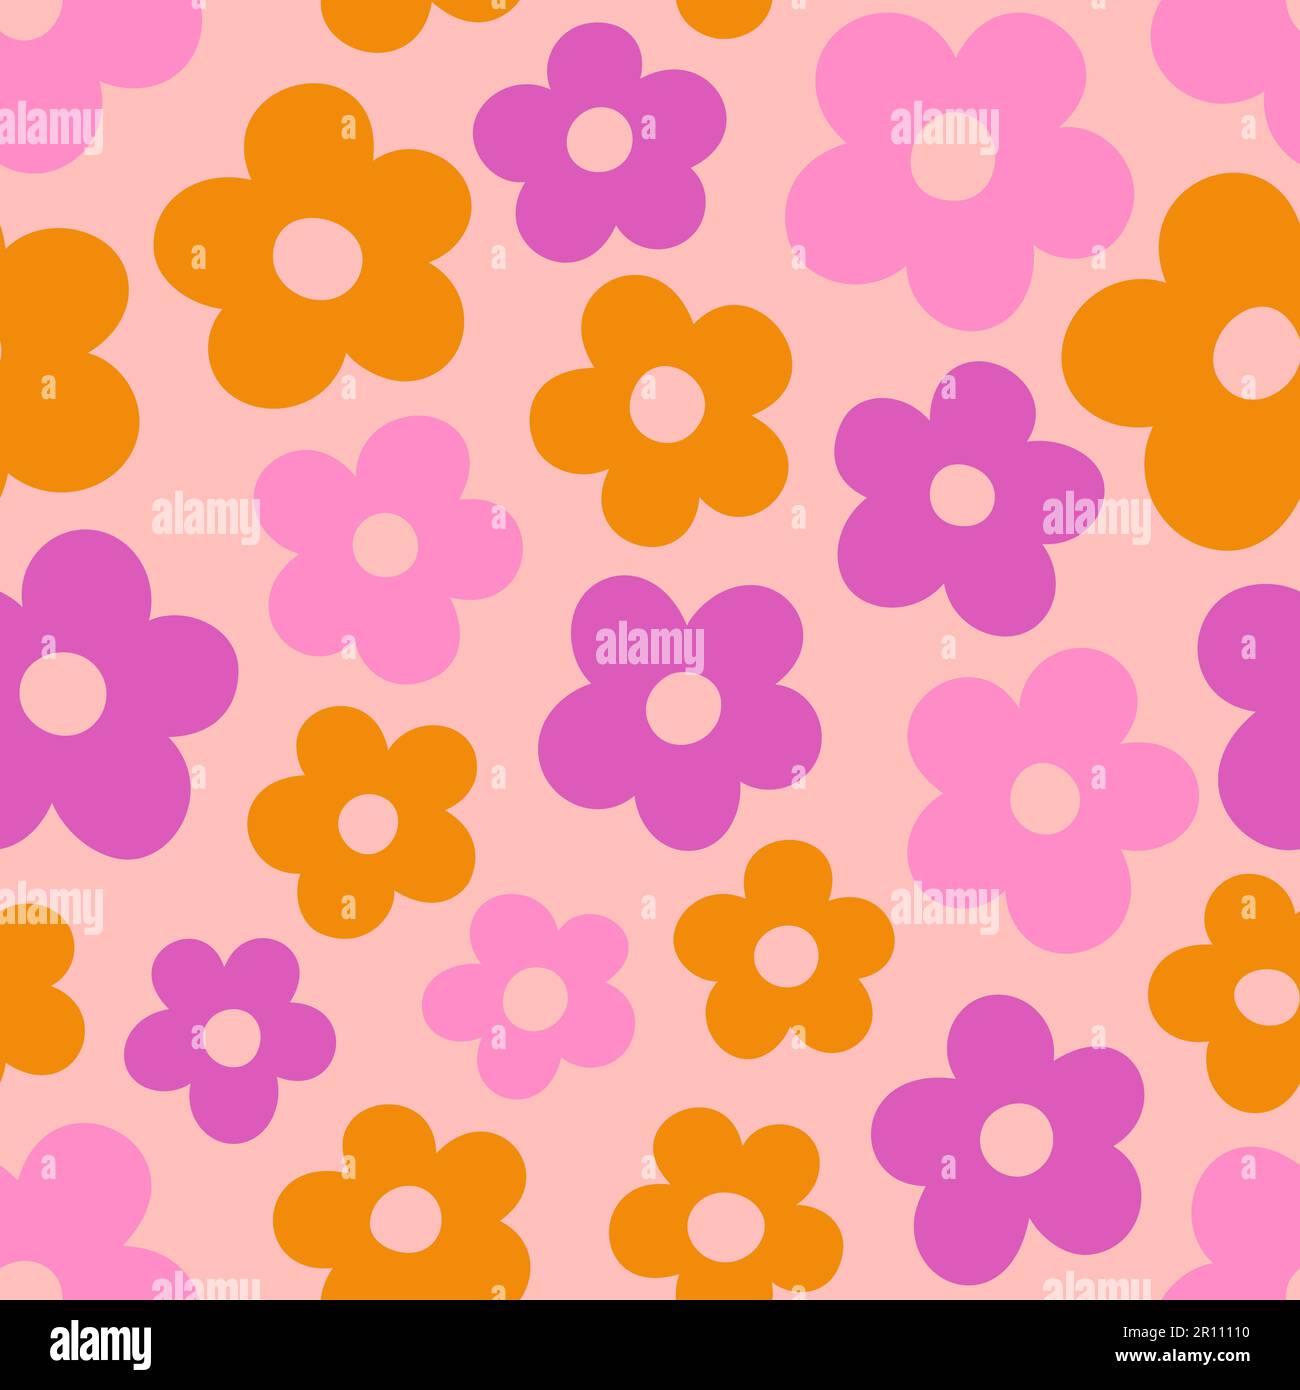 Daisy flower seamless pattern background. Spring vector